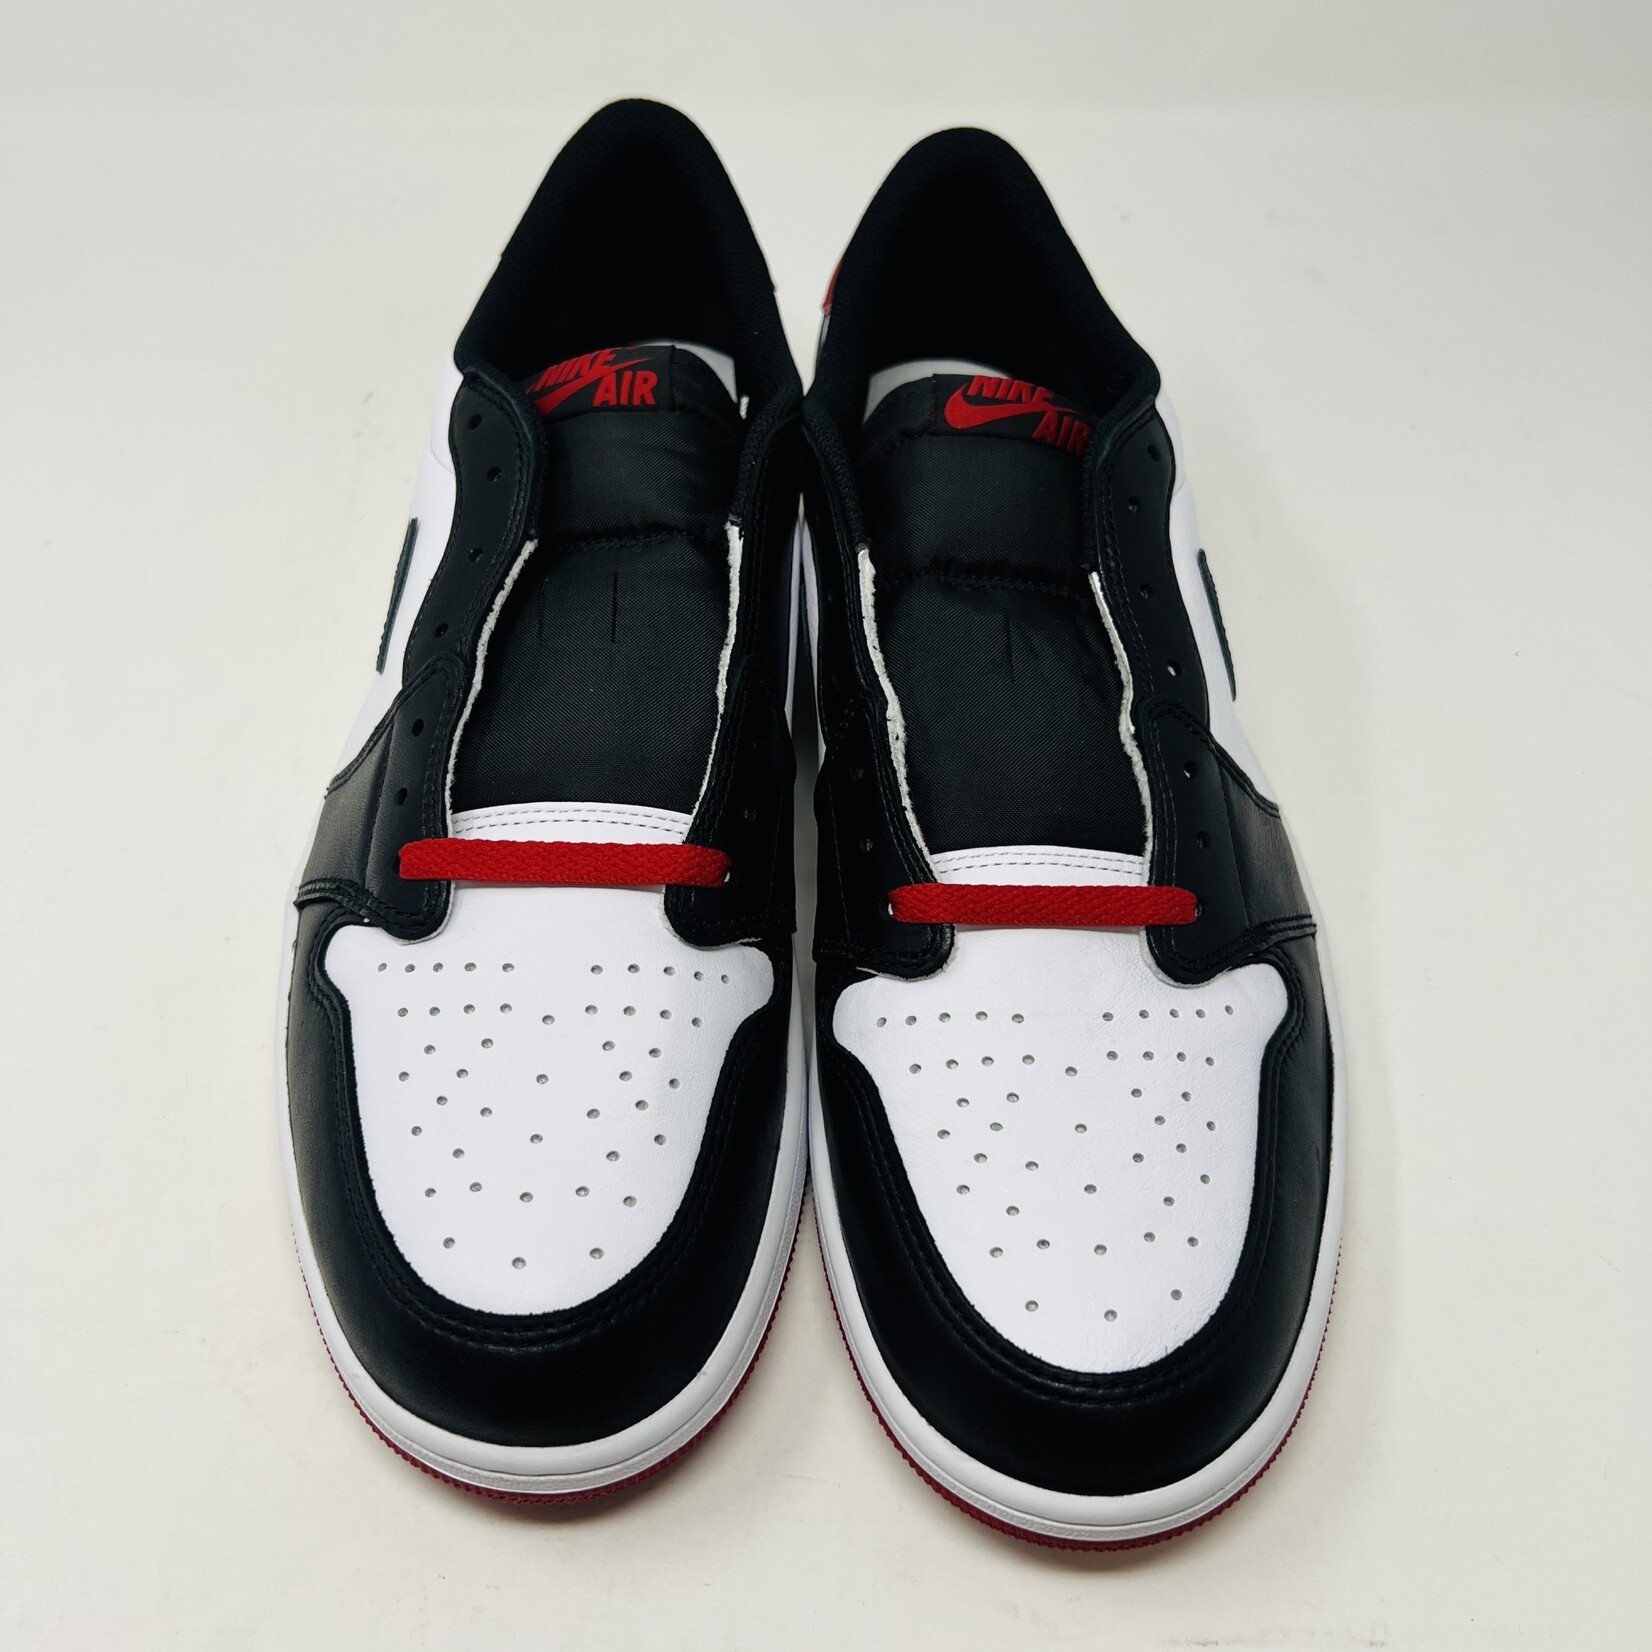 Jordan 1 Strap Low Black Toe for Sale, Authenticity Guaranteed